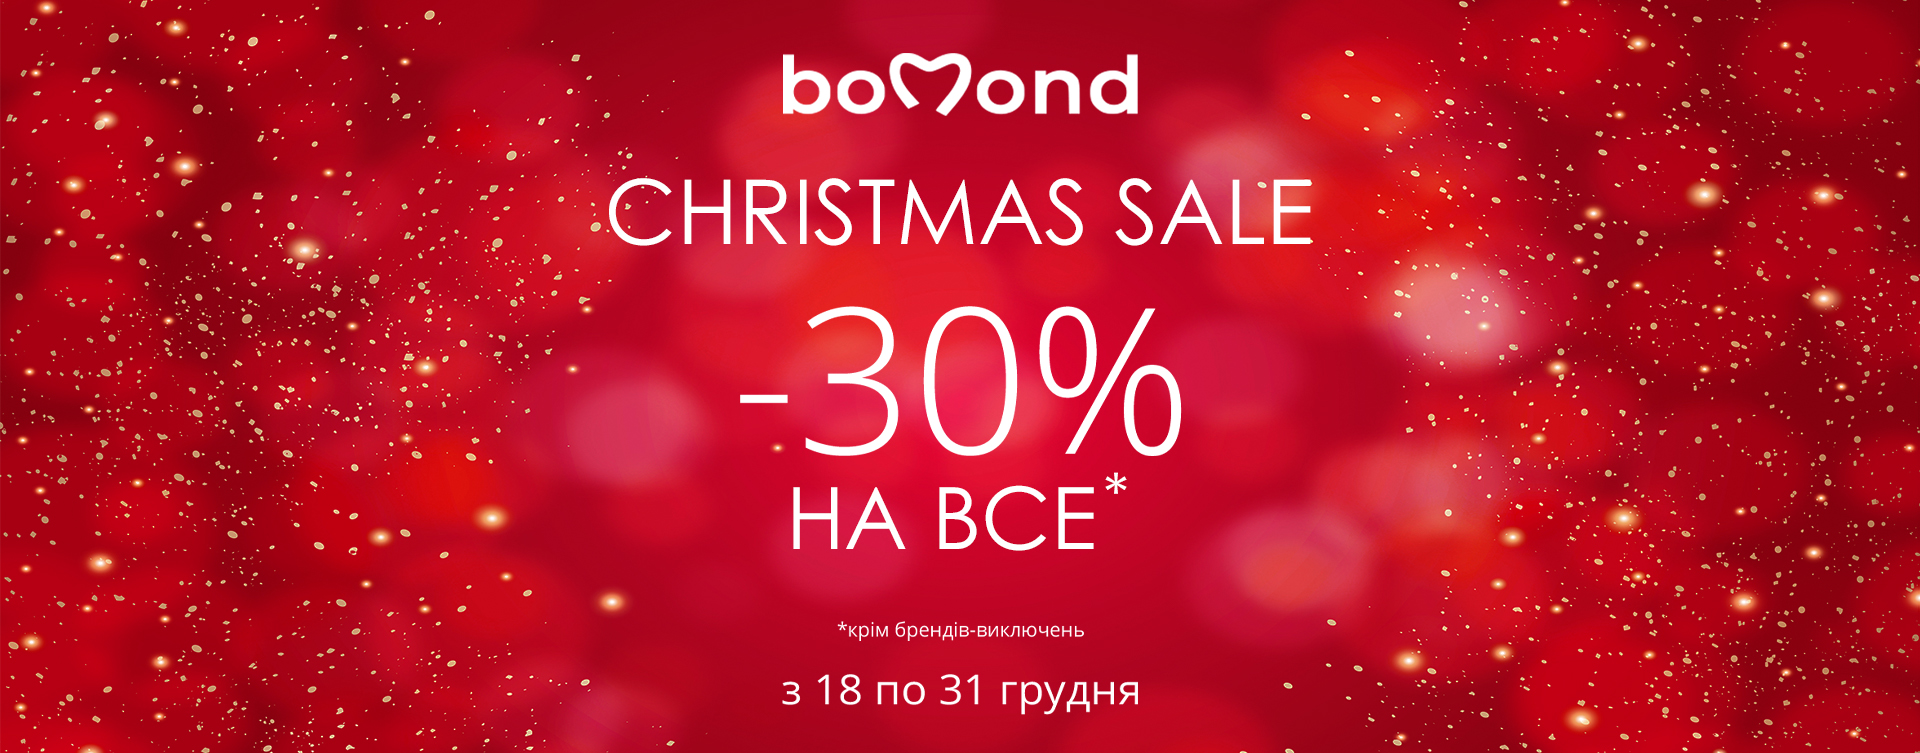 Christmas Sale -30% на все в bomond 